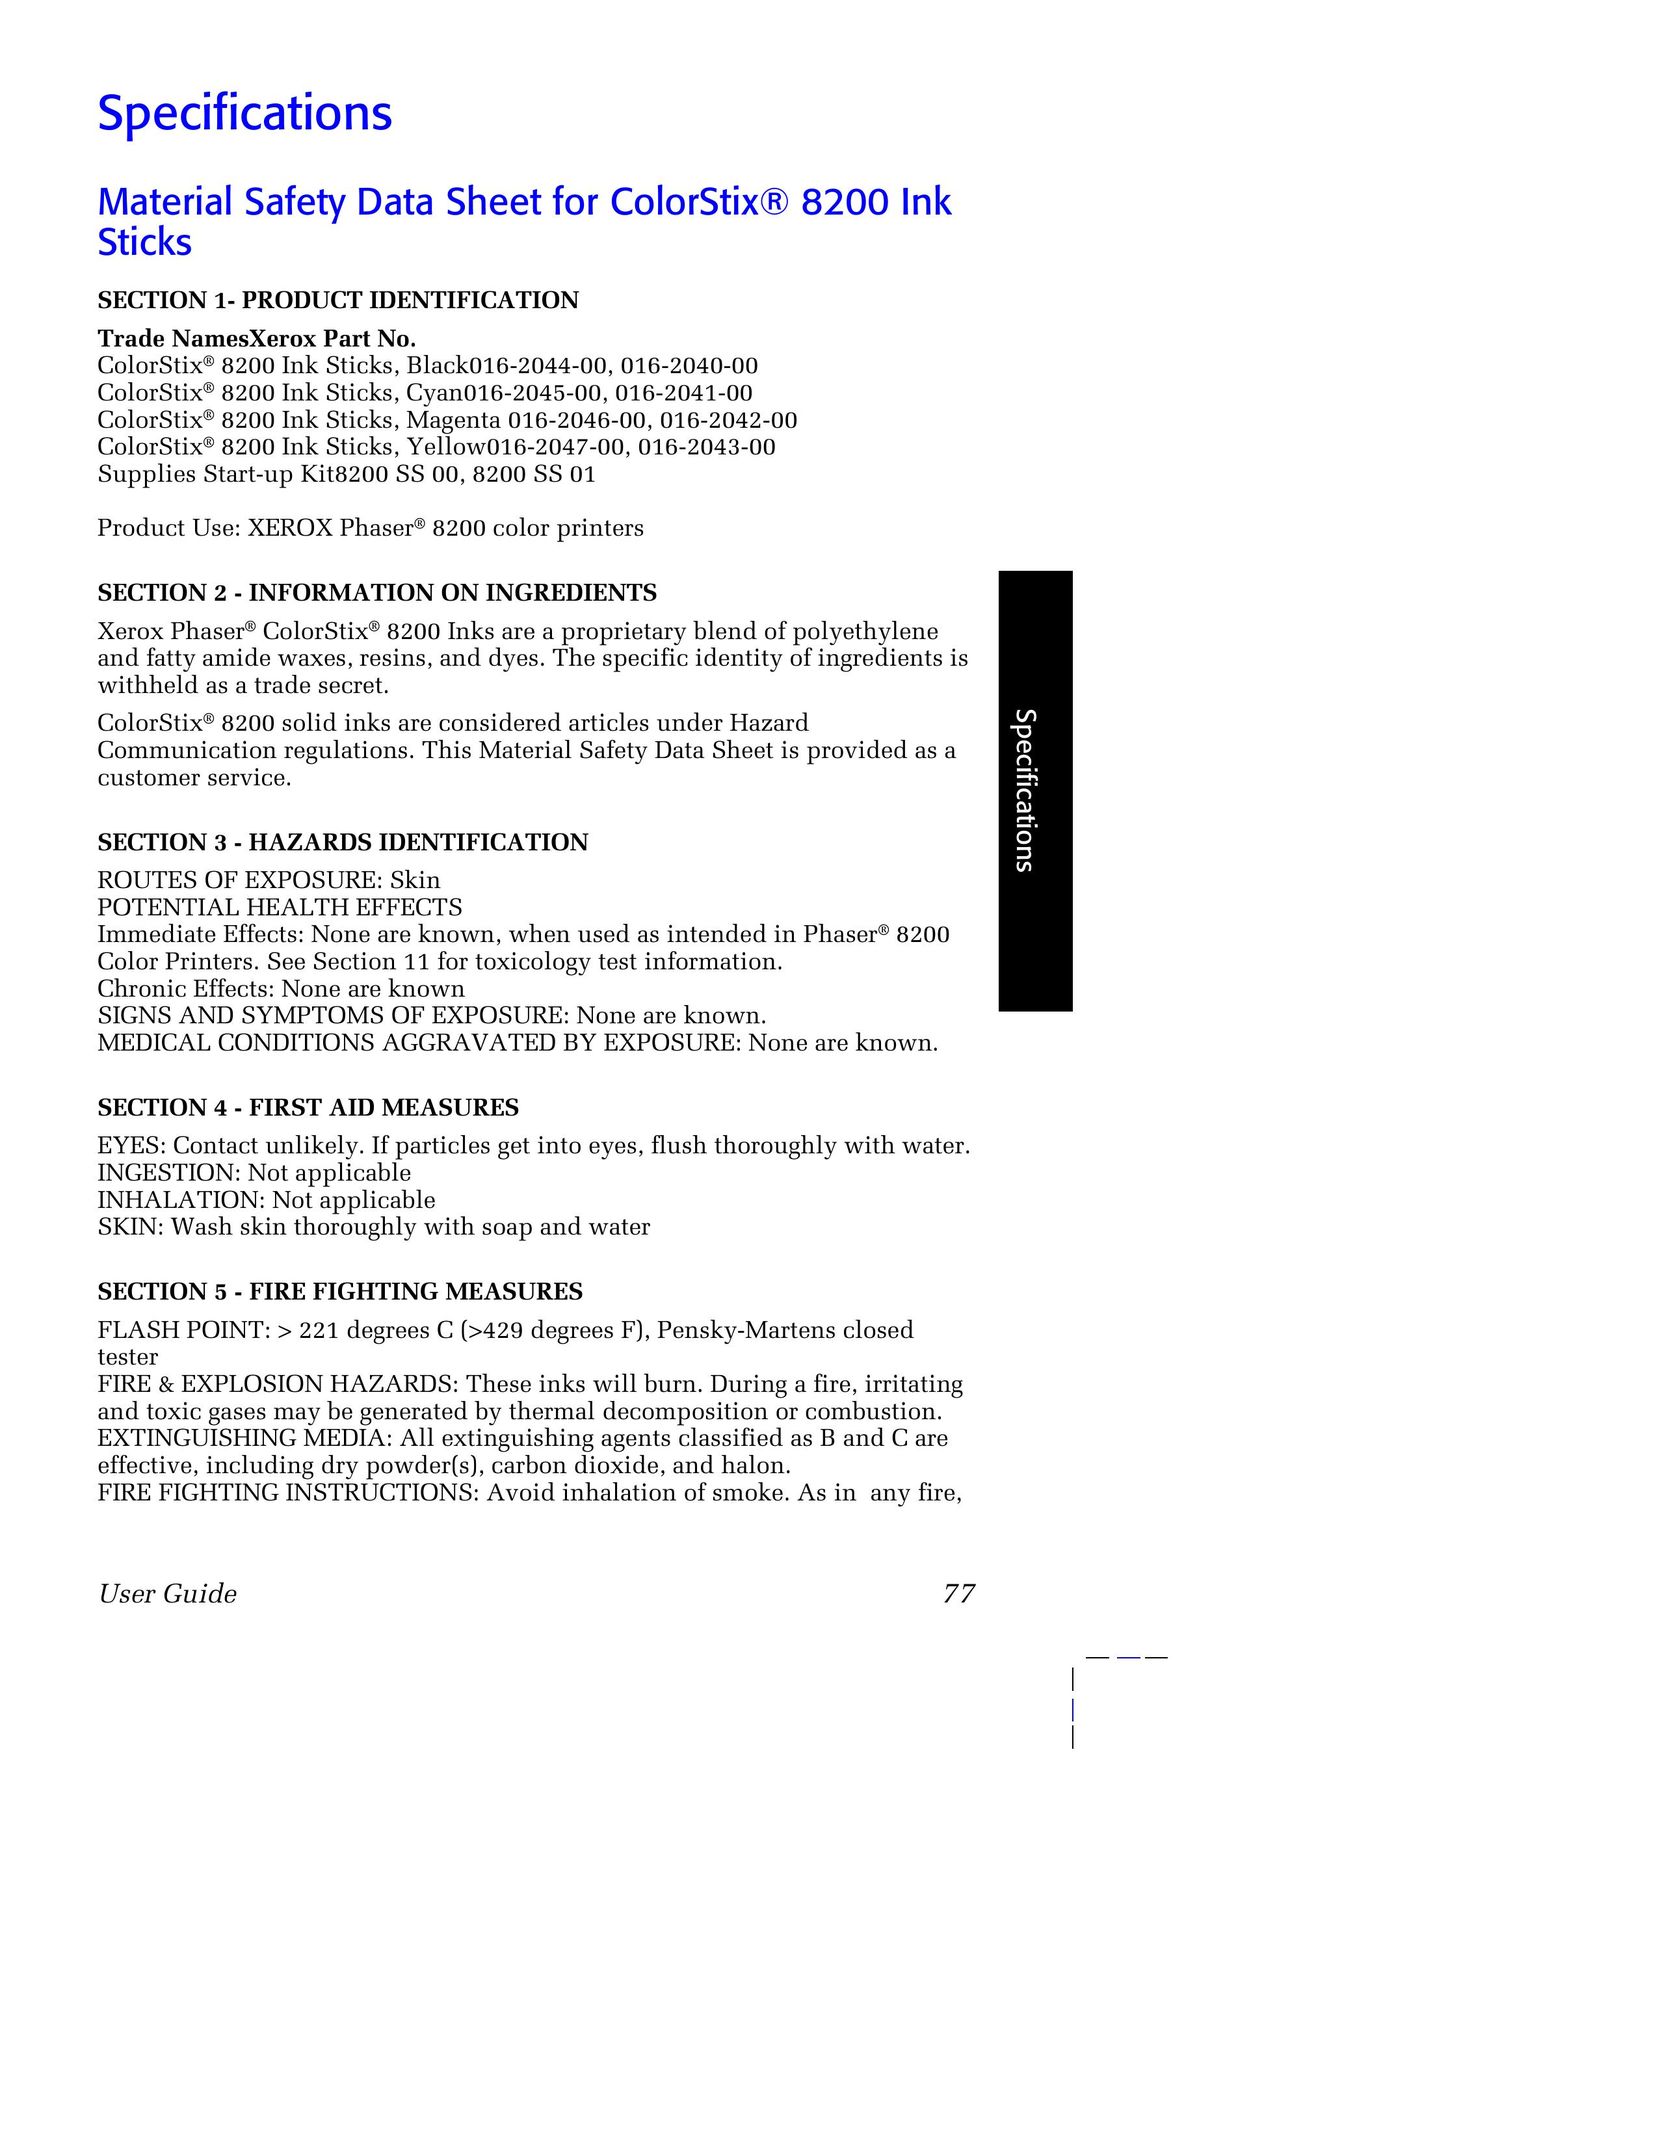 Xerox 016-2044-00 Printer Accessories User Manual